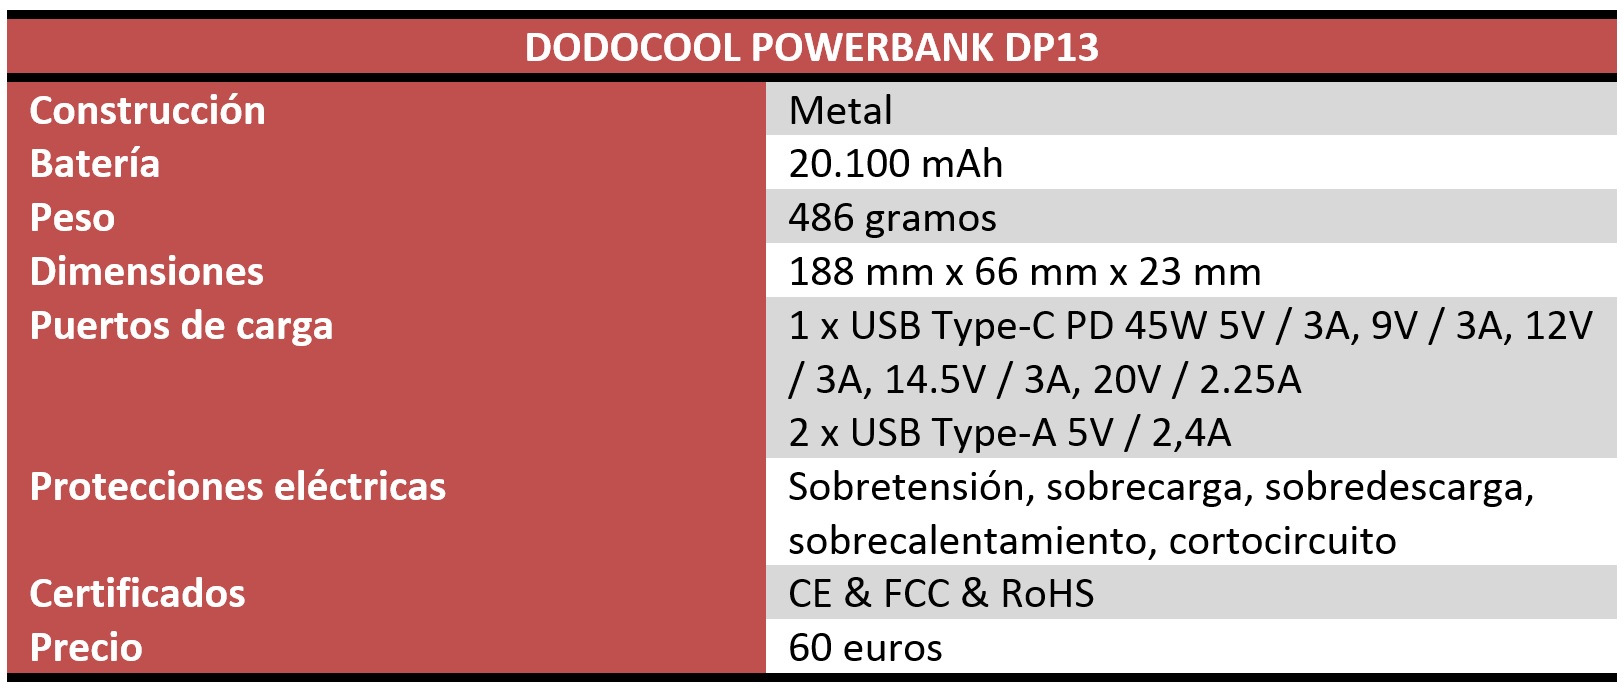 Dodocool Powerbank DP13 Review